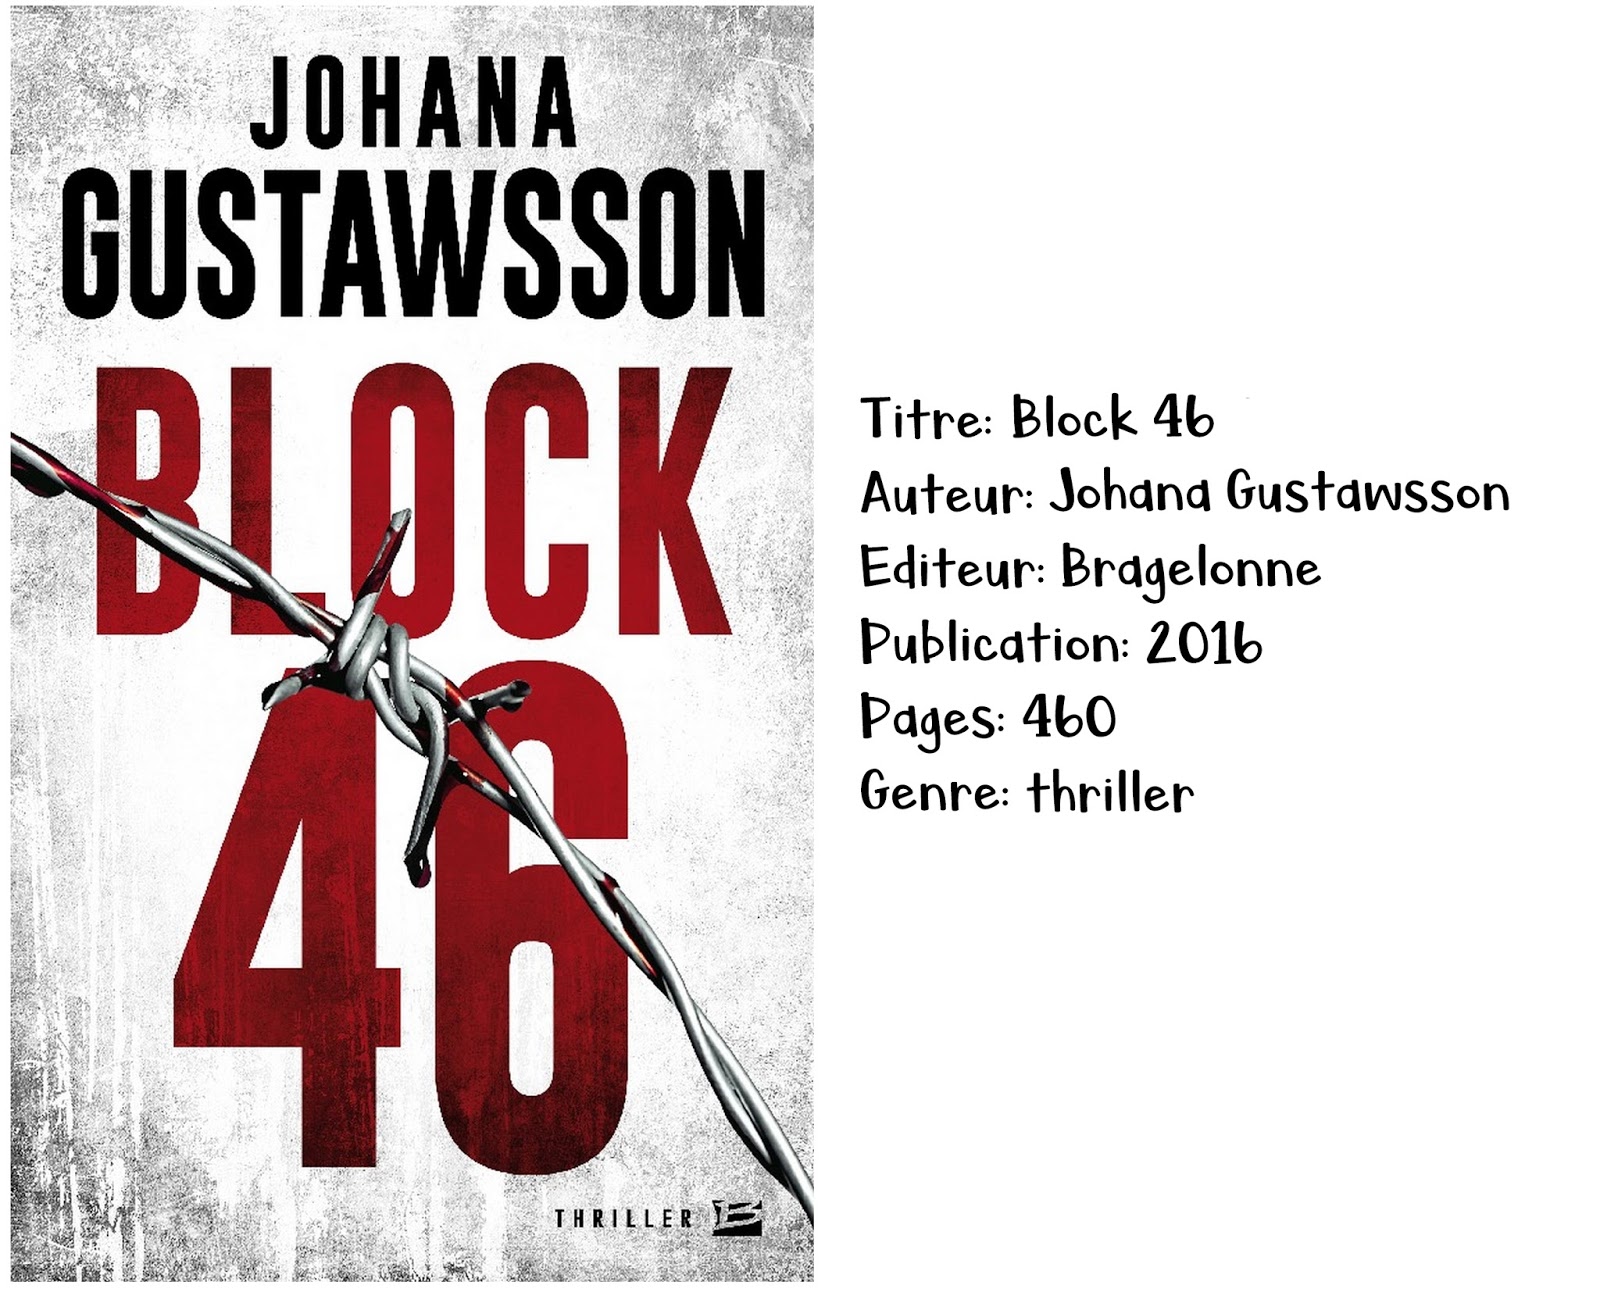 Block 46 de Johana Gustawsson